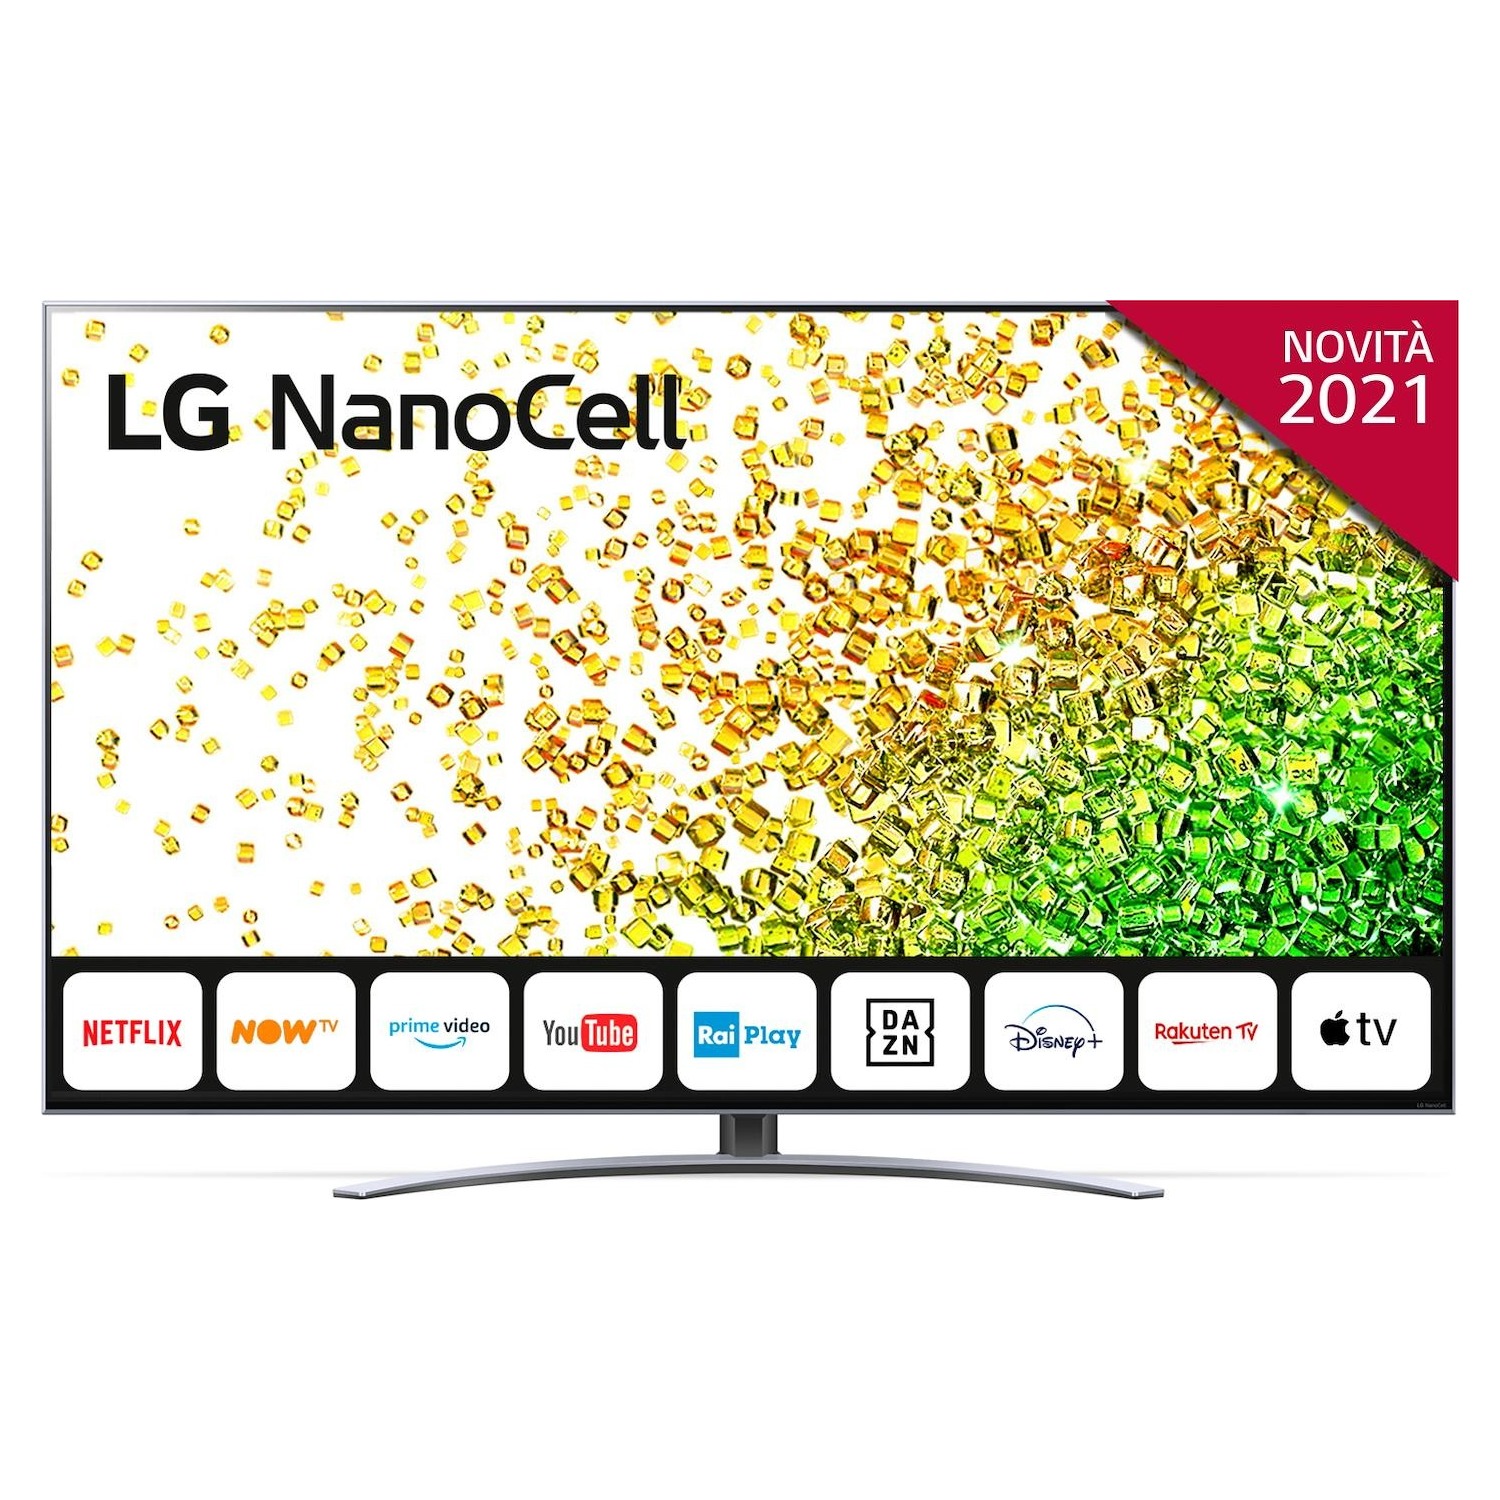 Immagine per TV LED LG 75NANO886 Calibrato 4K e FULL HD da DIMOStore